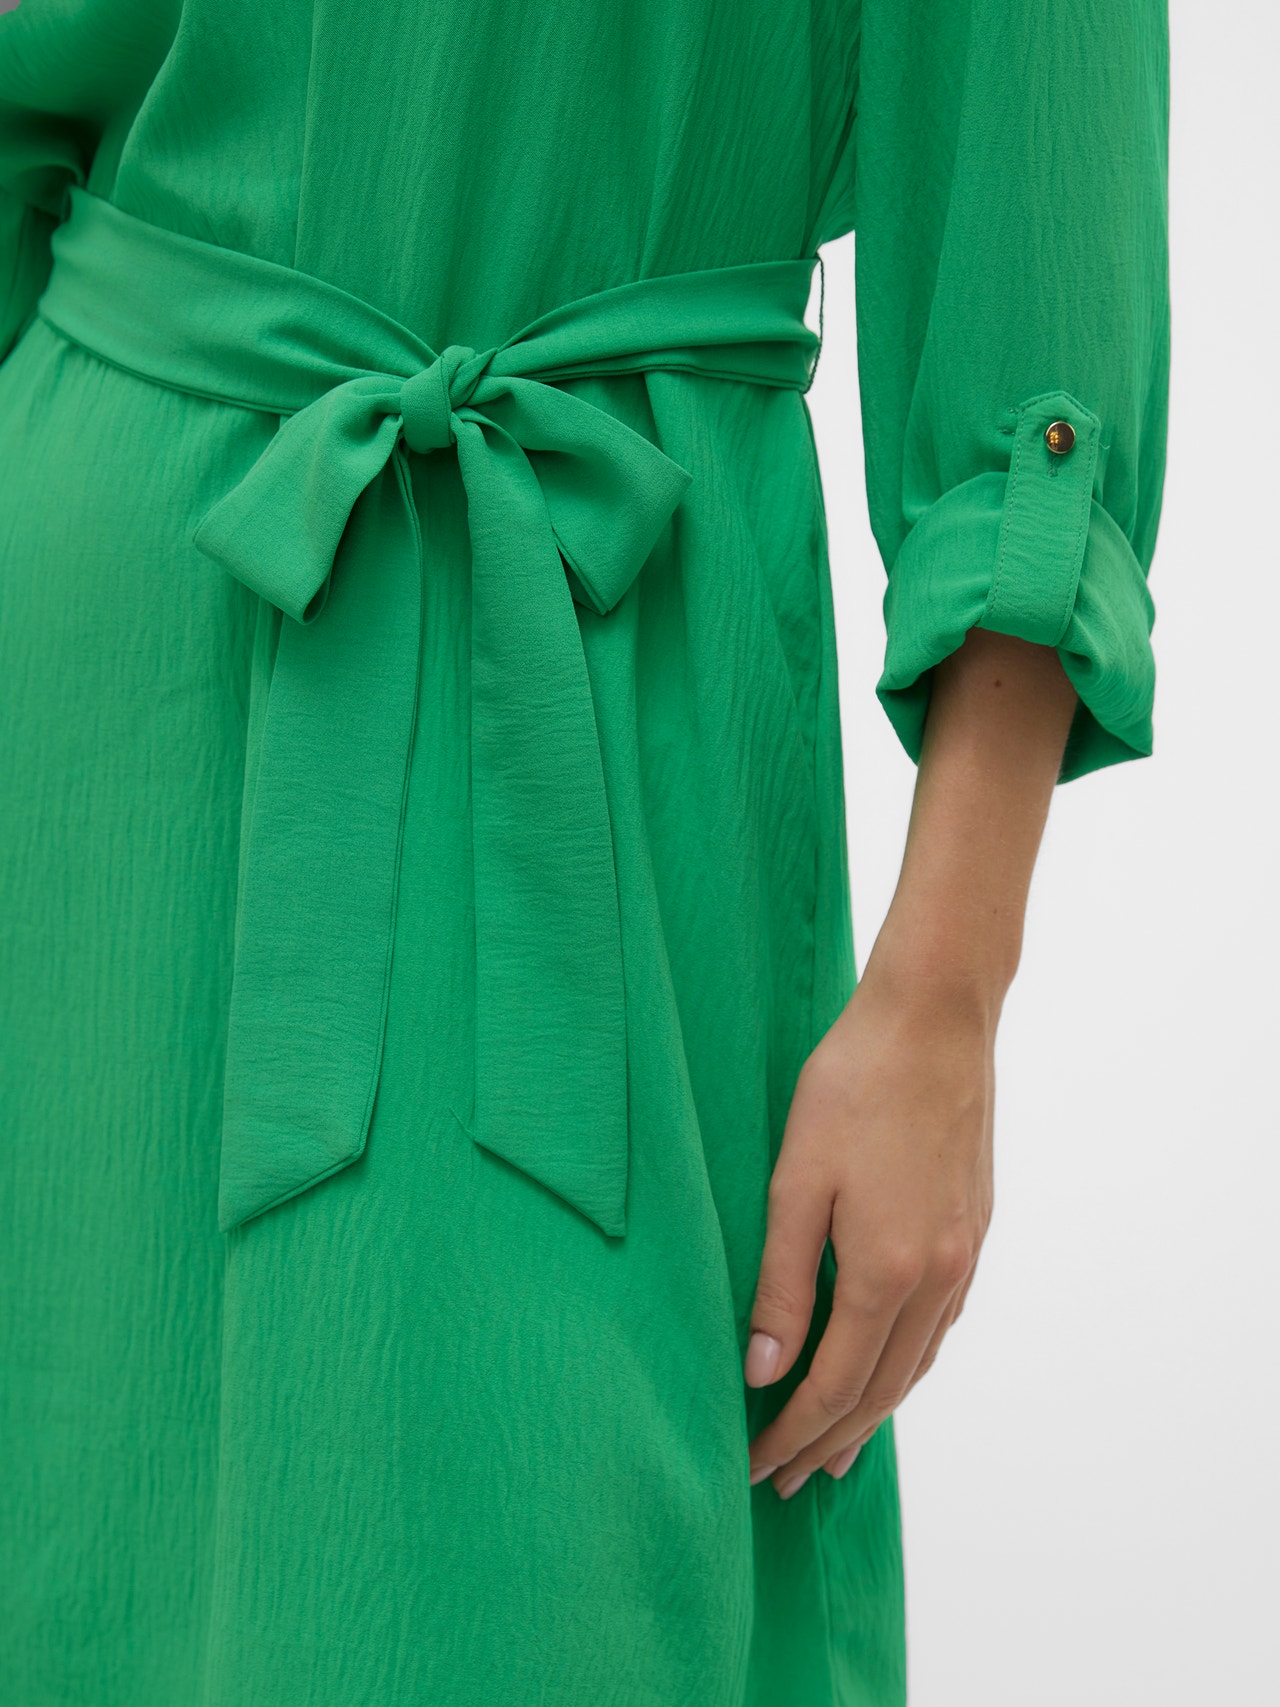 Vero Moda VMGAVINA Midi-jurk -Bright Green - 10302327